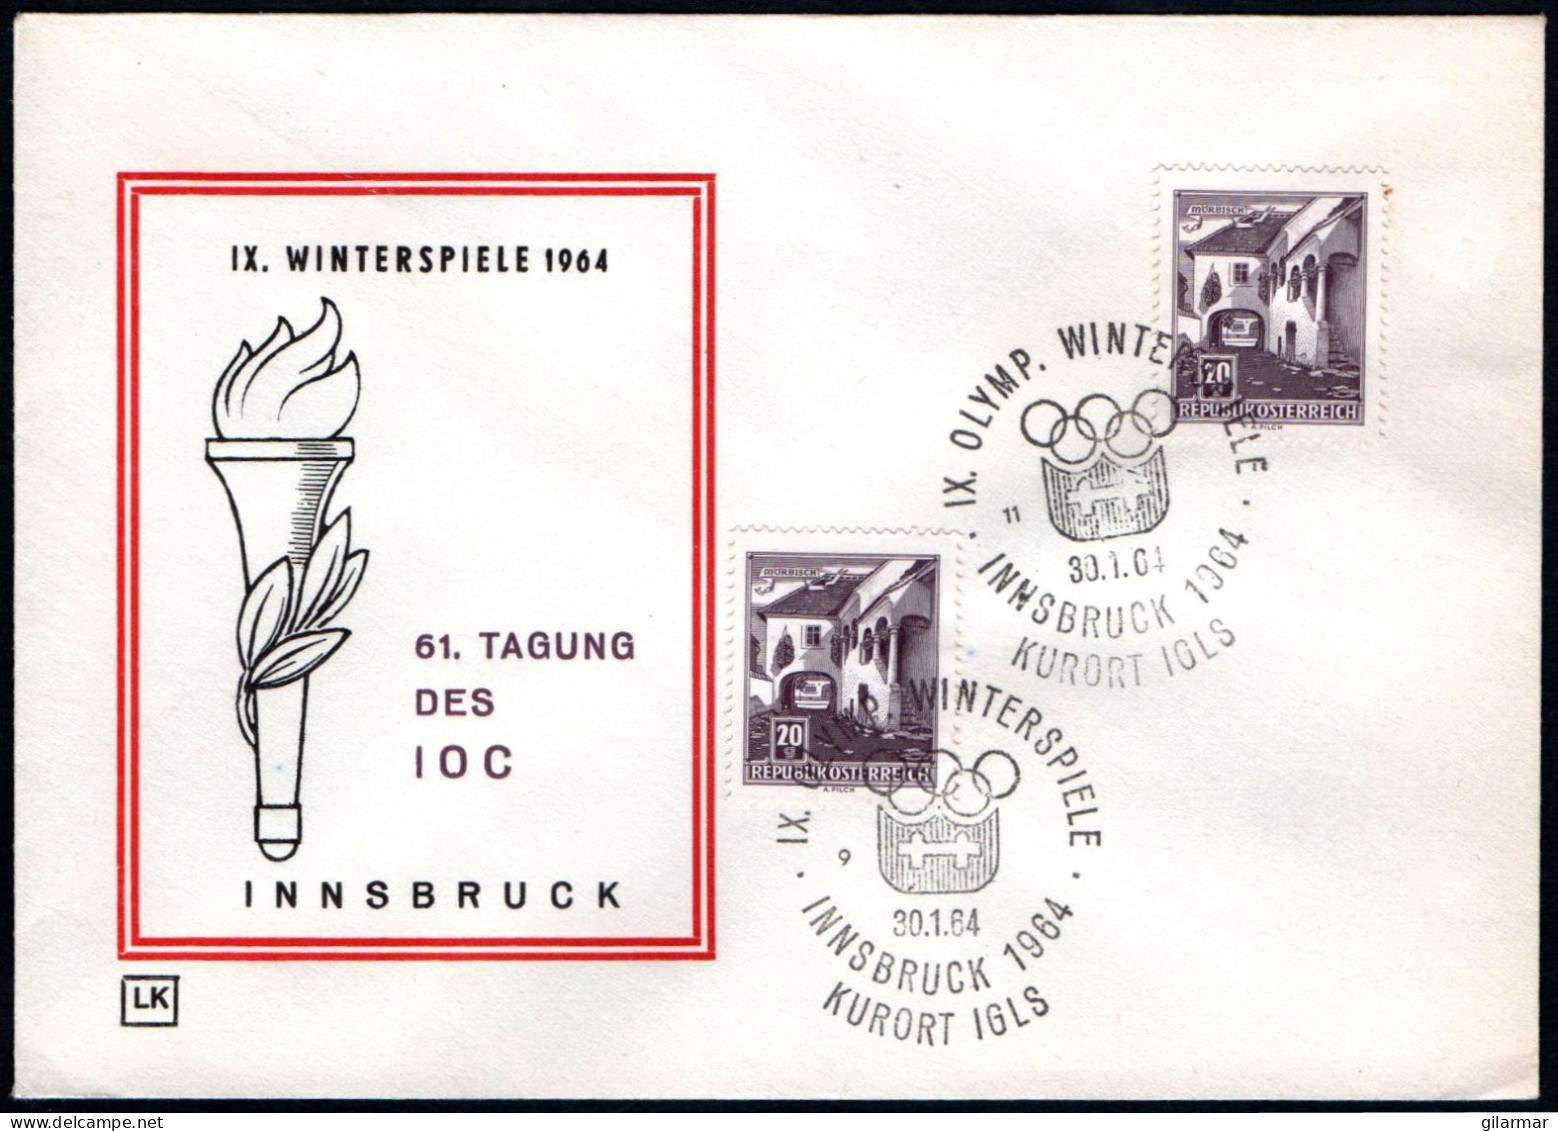 AUSTRIA KURORT IGLS 1964 - IX OLYMPIC WINTER GAMES - INNSBRUCK '64 - CANCELS # 9 & 11 - G - Invierno 1964: Innsbruck